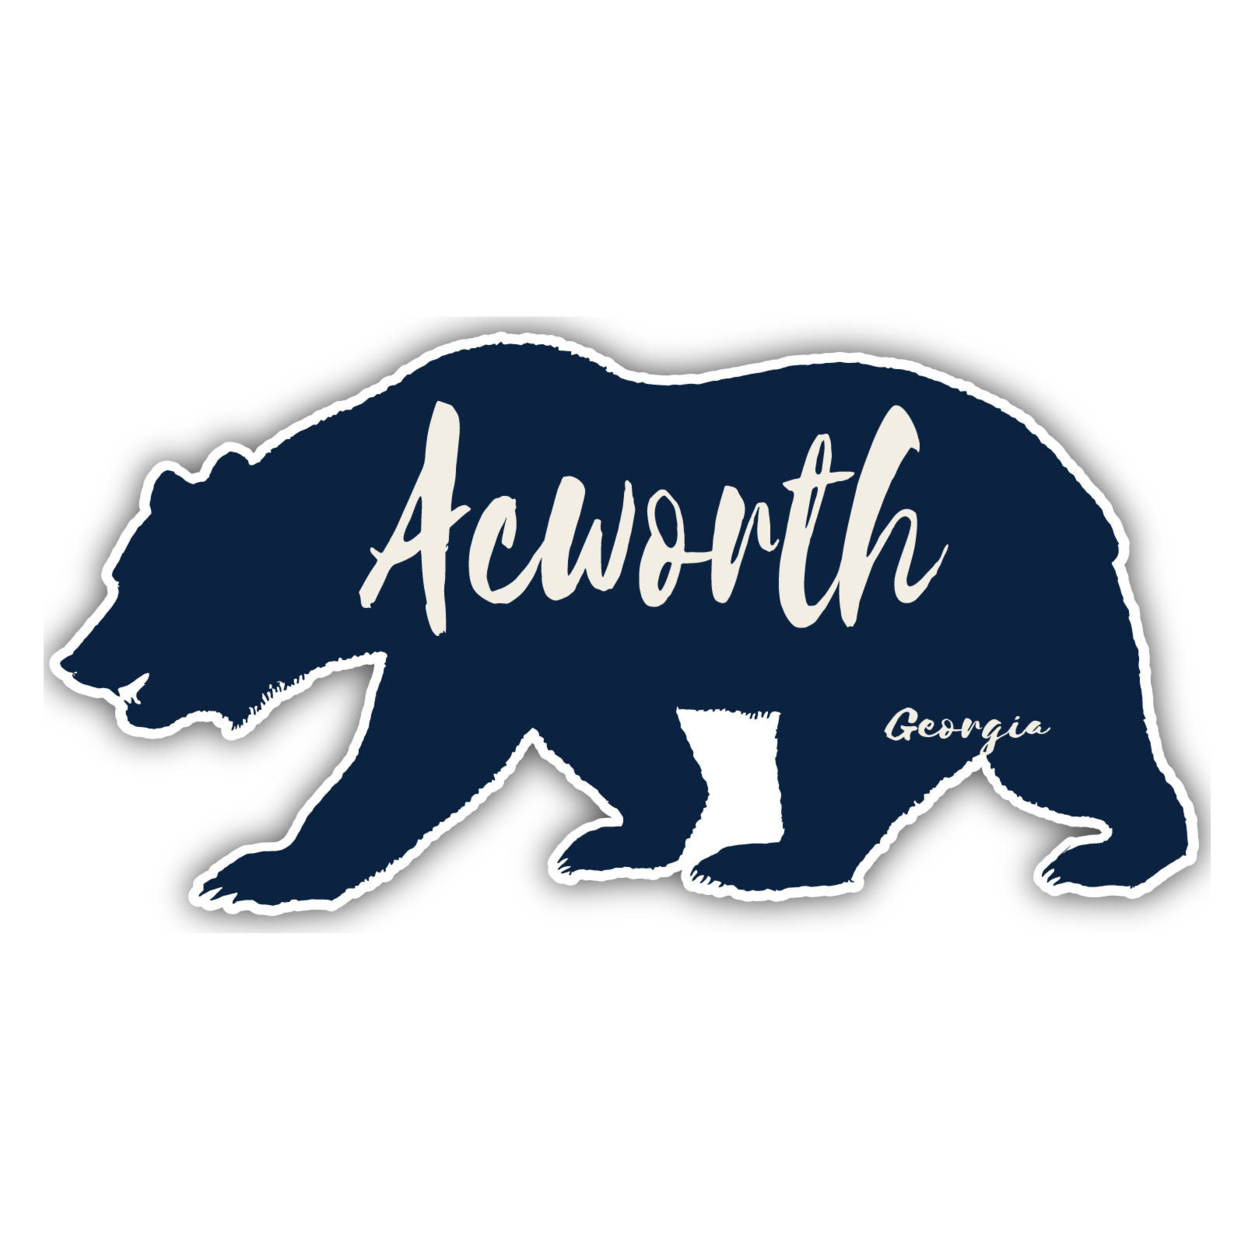 Acworth Georgia Souvenir Decorative Stickers (Choose Theme And Size) - 4-Pack, 4-Inch, Bear